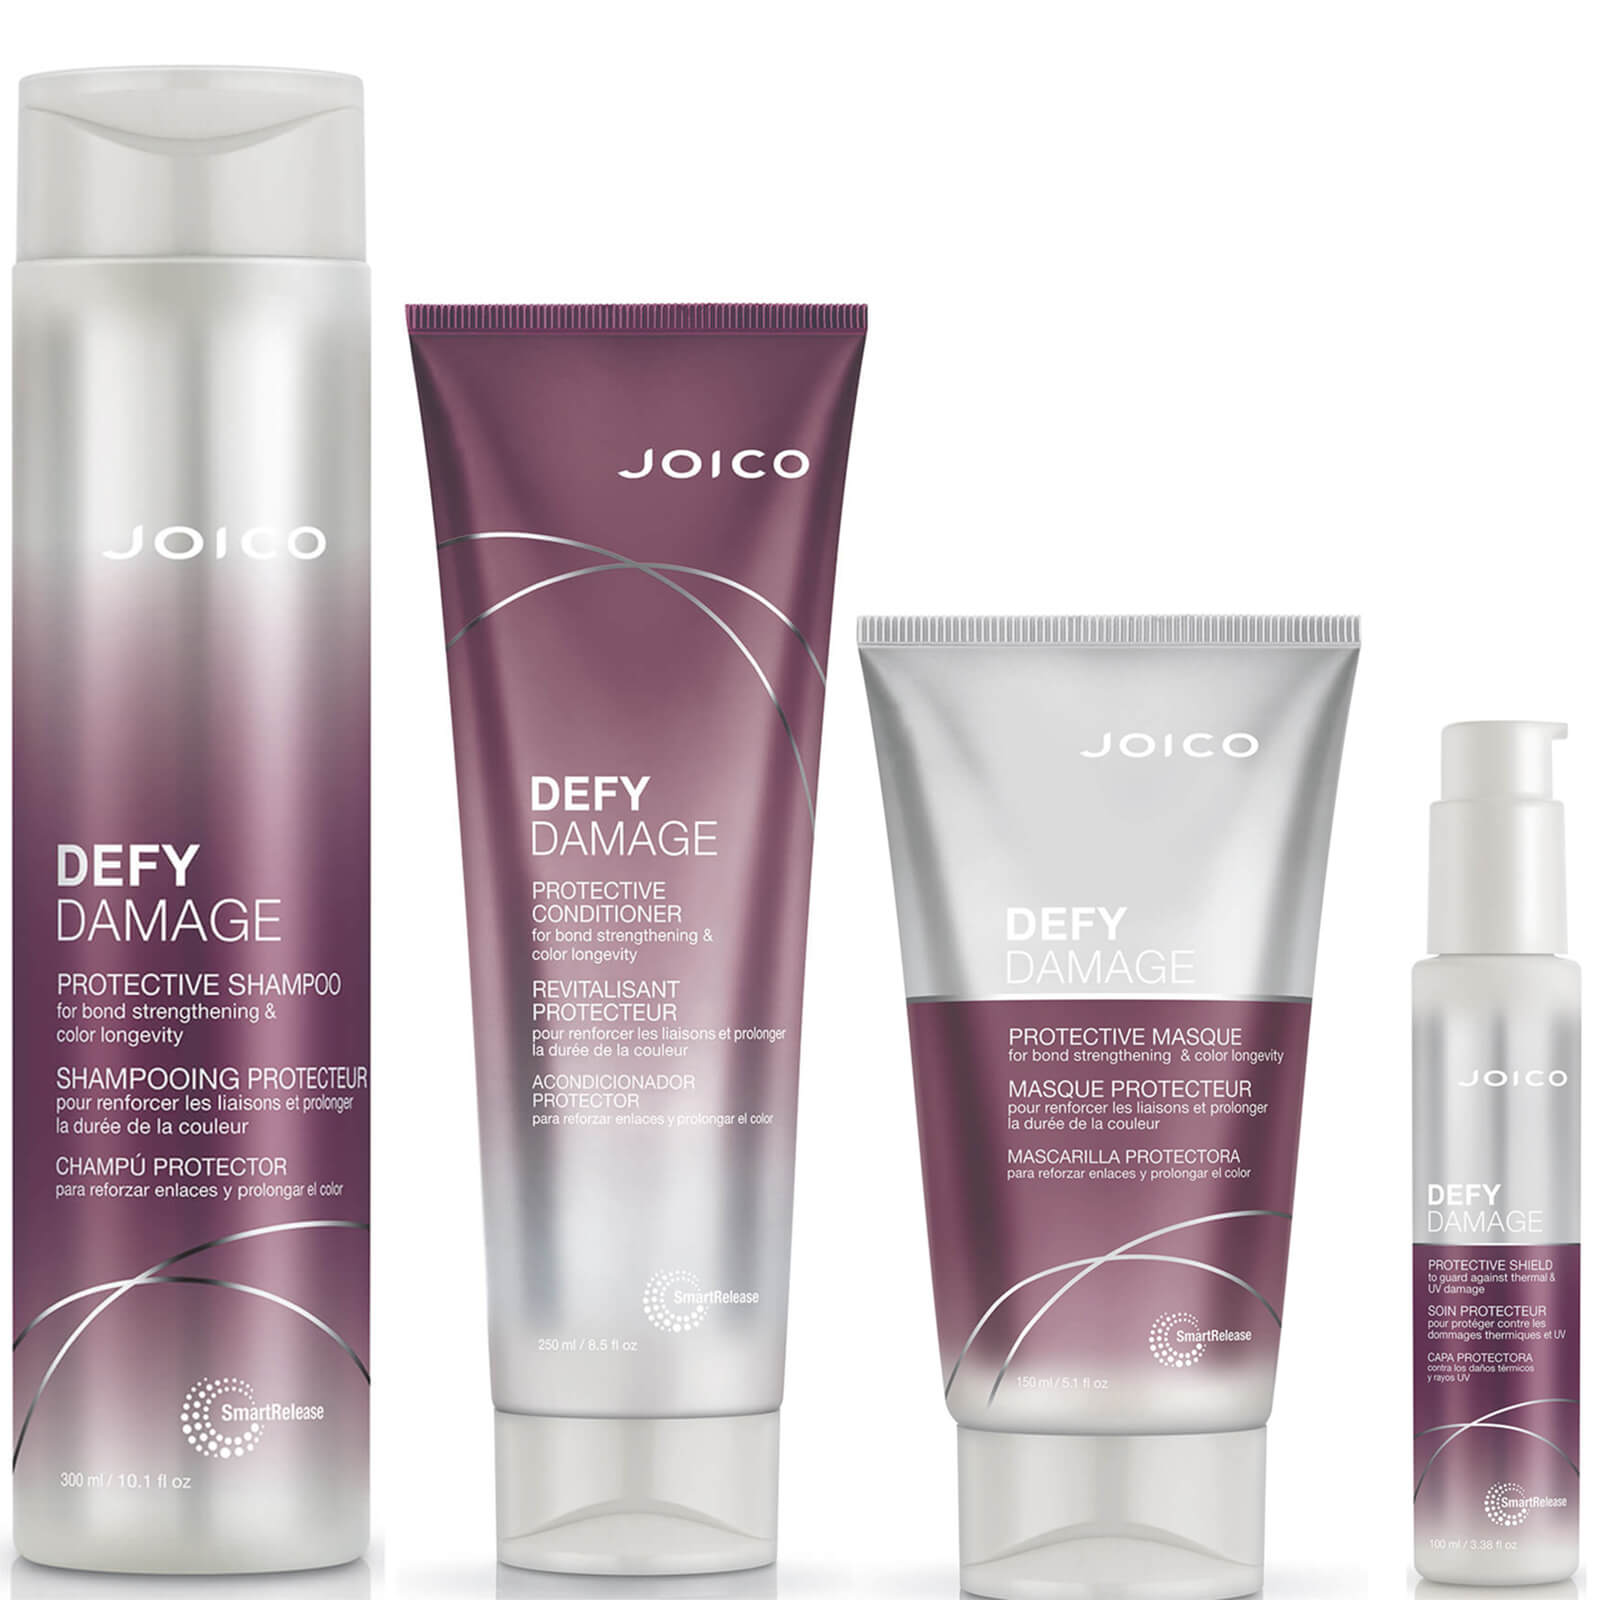 Joico Defy Damage Shampoo, Conditioner, Masque and Shield Set lookfantastic.com imagine